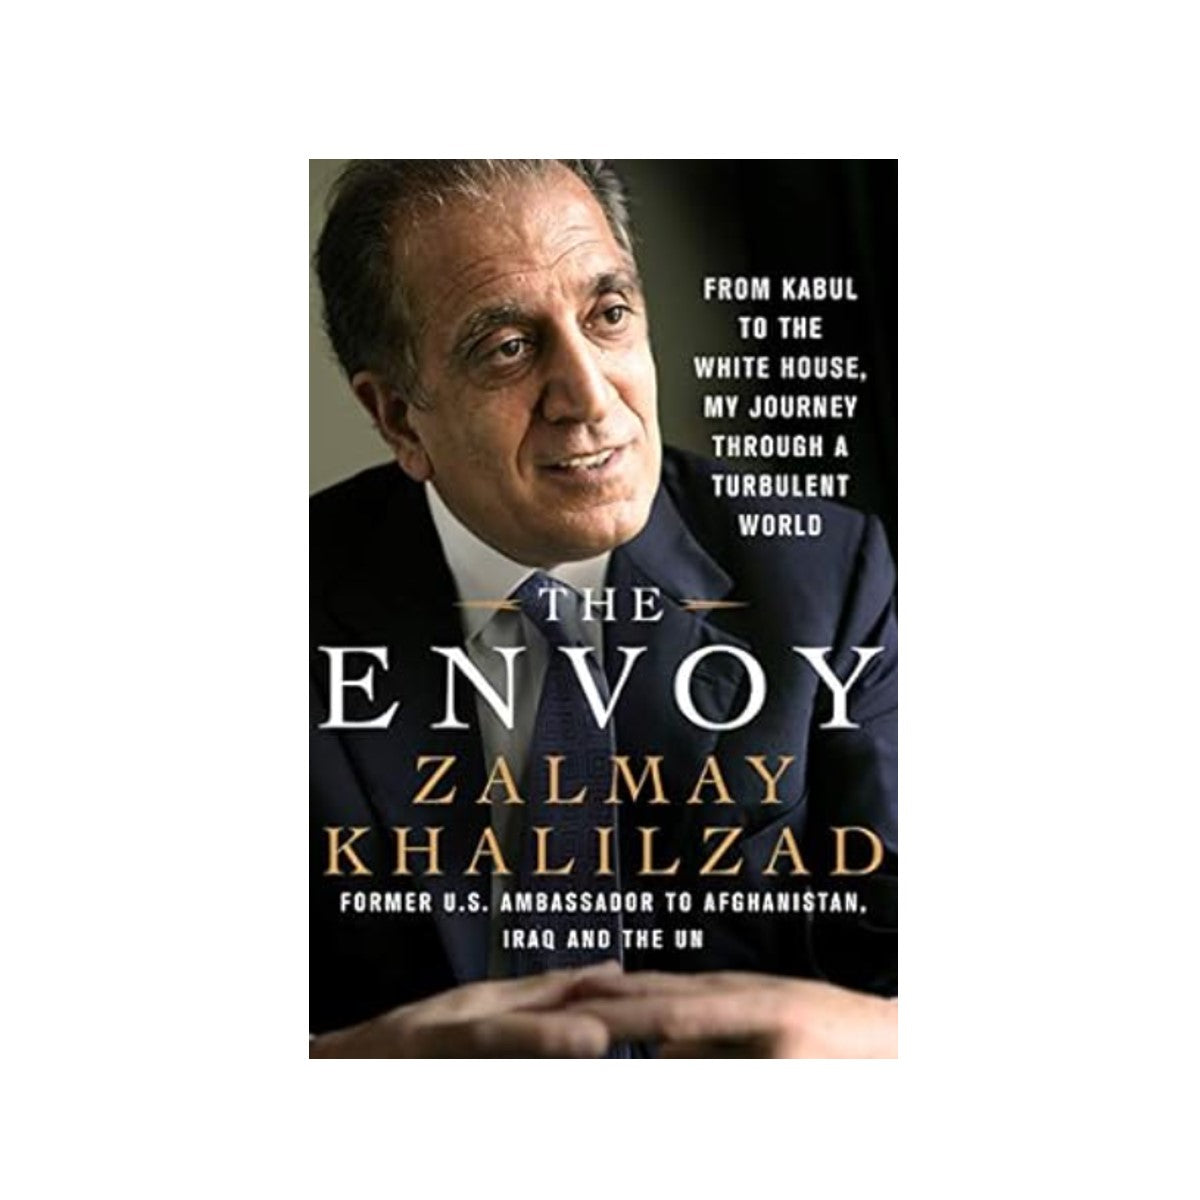 The Envoy - Zalmay Khalilzad